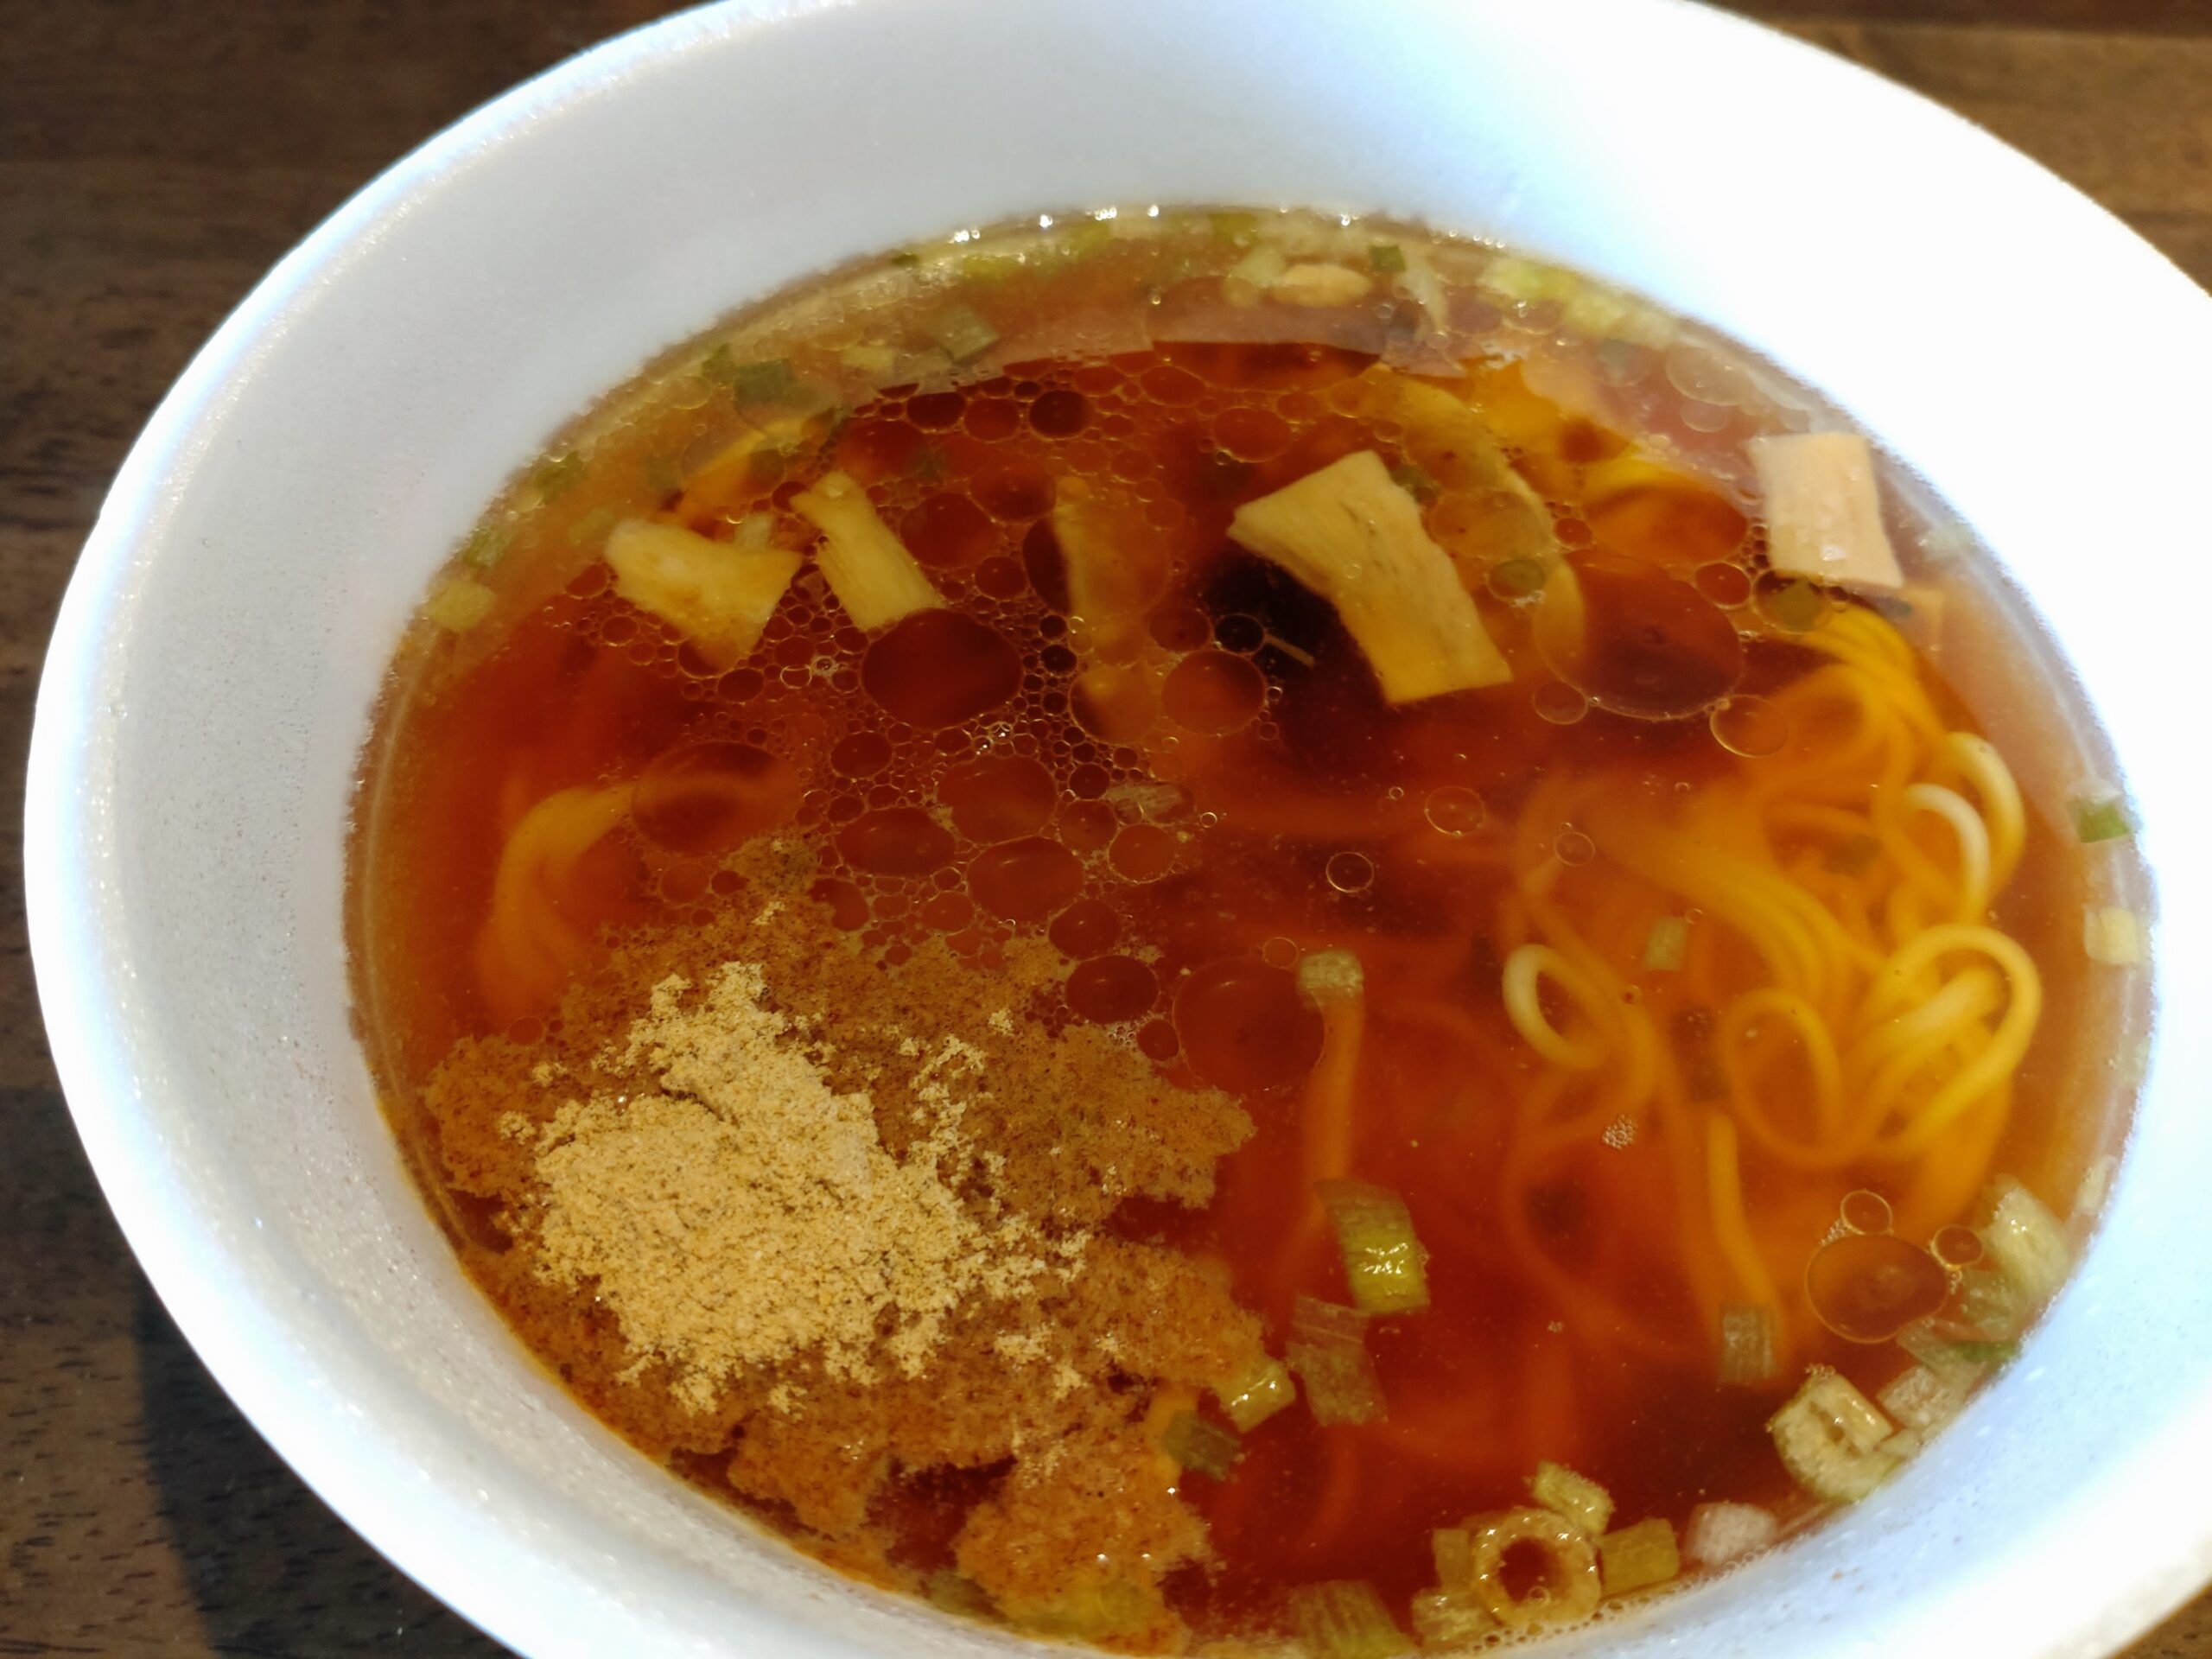 The淡麗 らぁ麺や嶋監修 醤油らぁ麺に粉末スープと液体スープを入れたところ